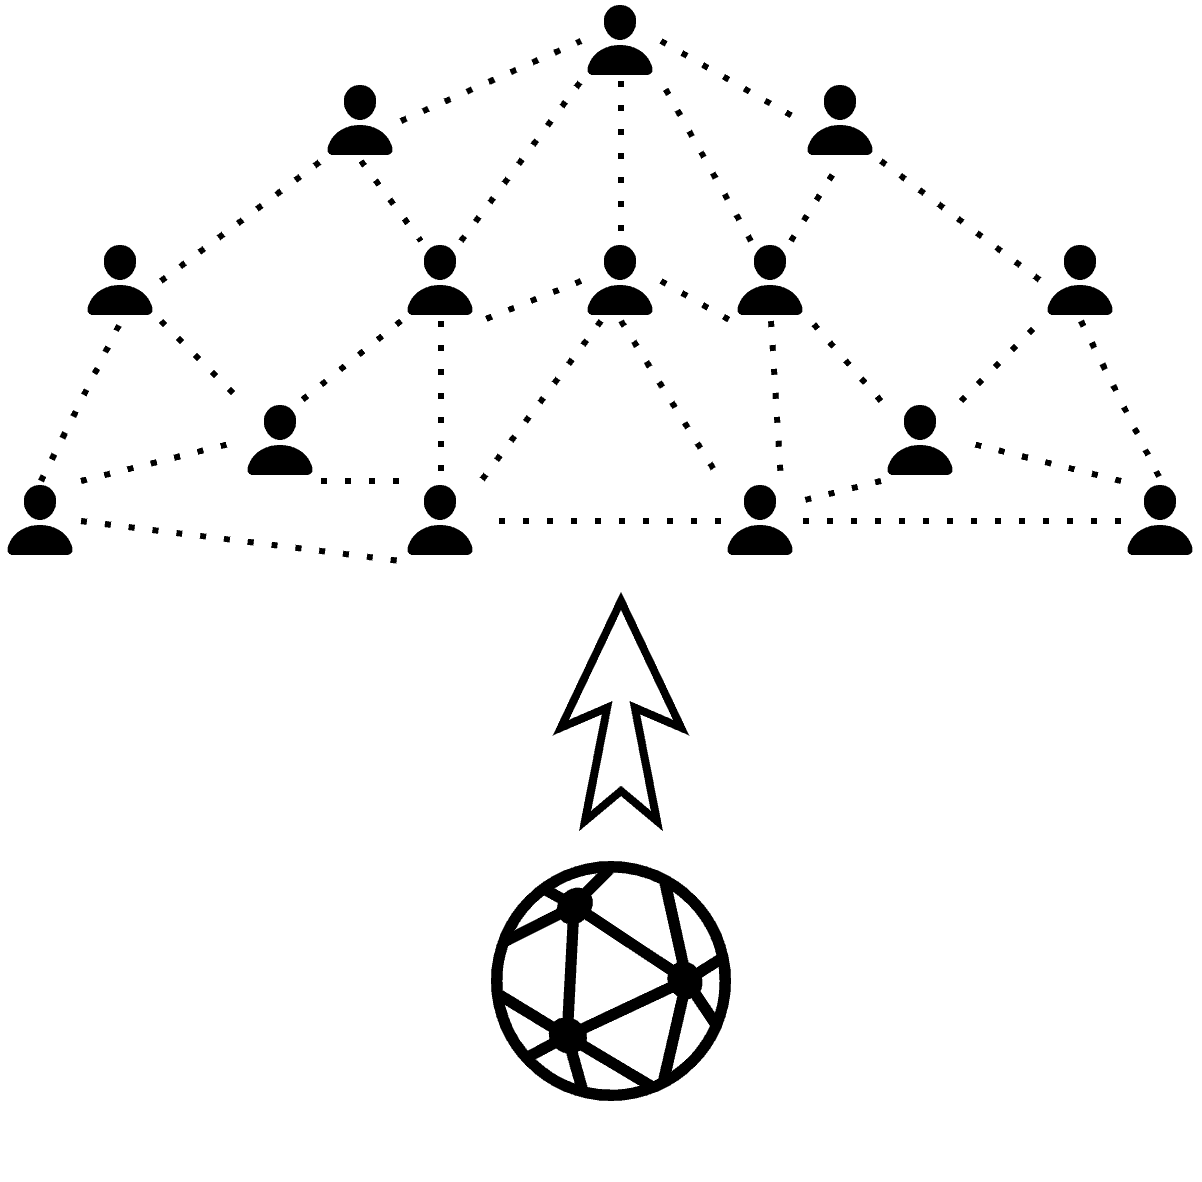 Edge Network